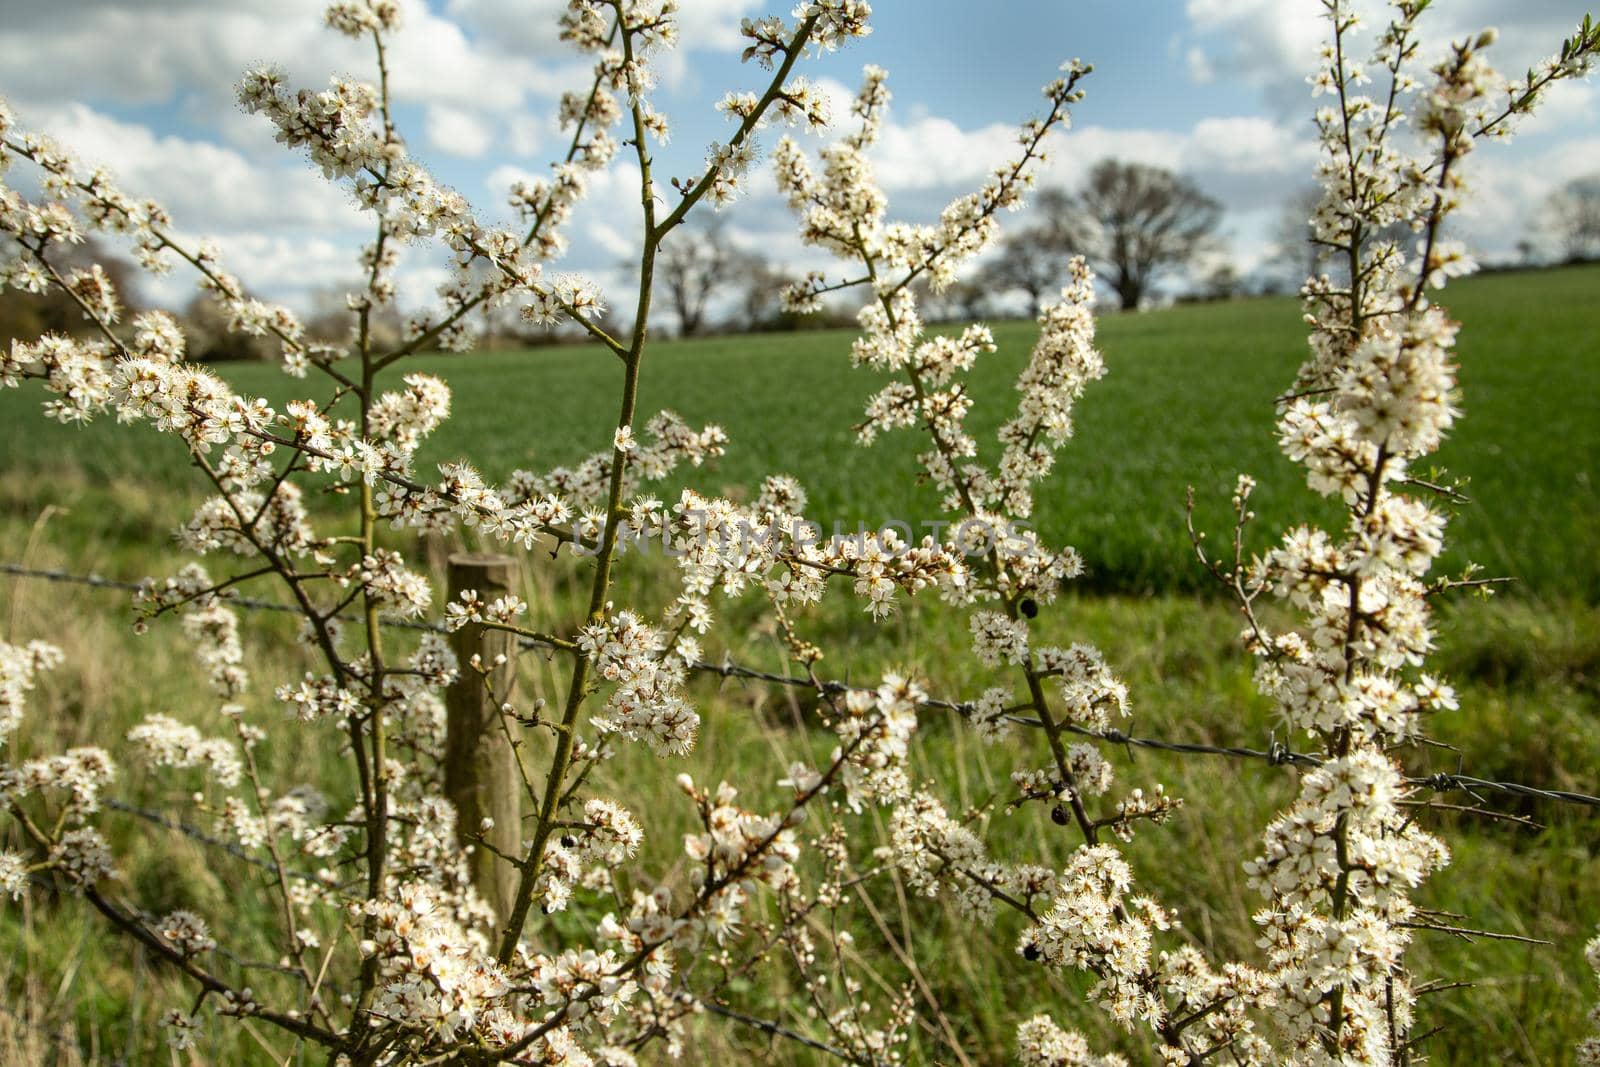 Sloe blossom, prunus spinosa bush, blackthorn during sunny spring day over rural landscape. UK, Suffolk